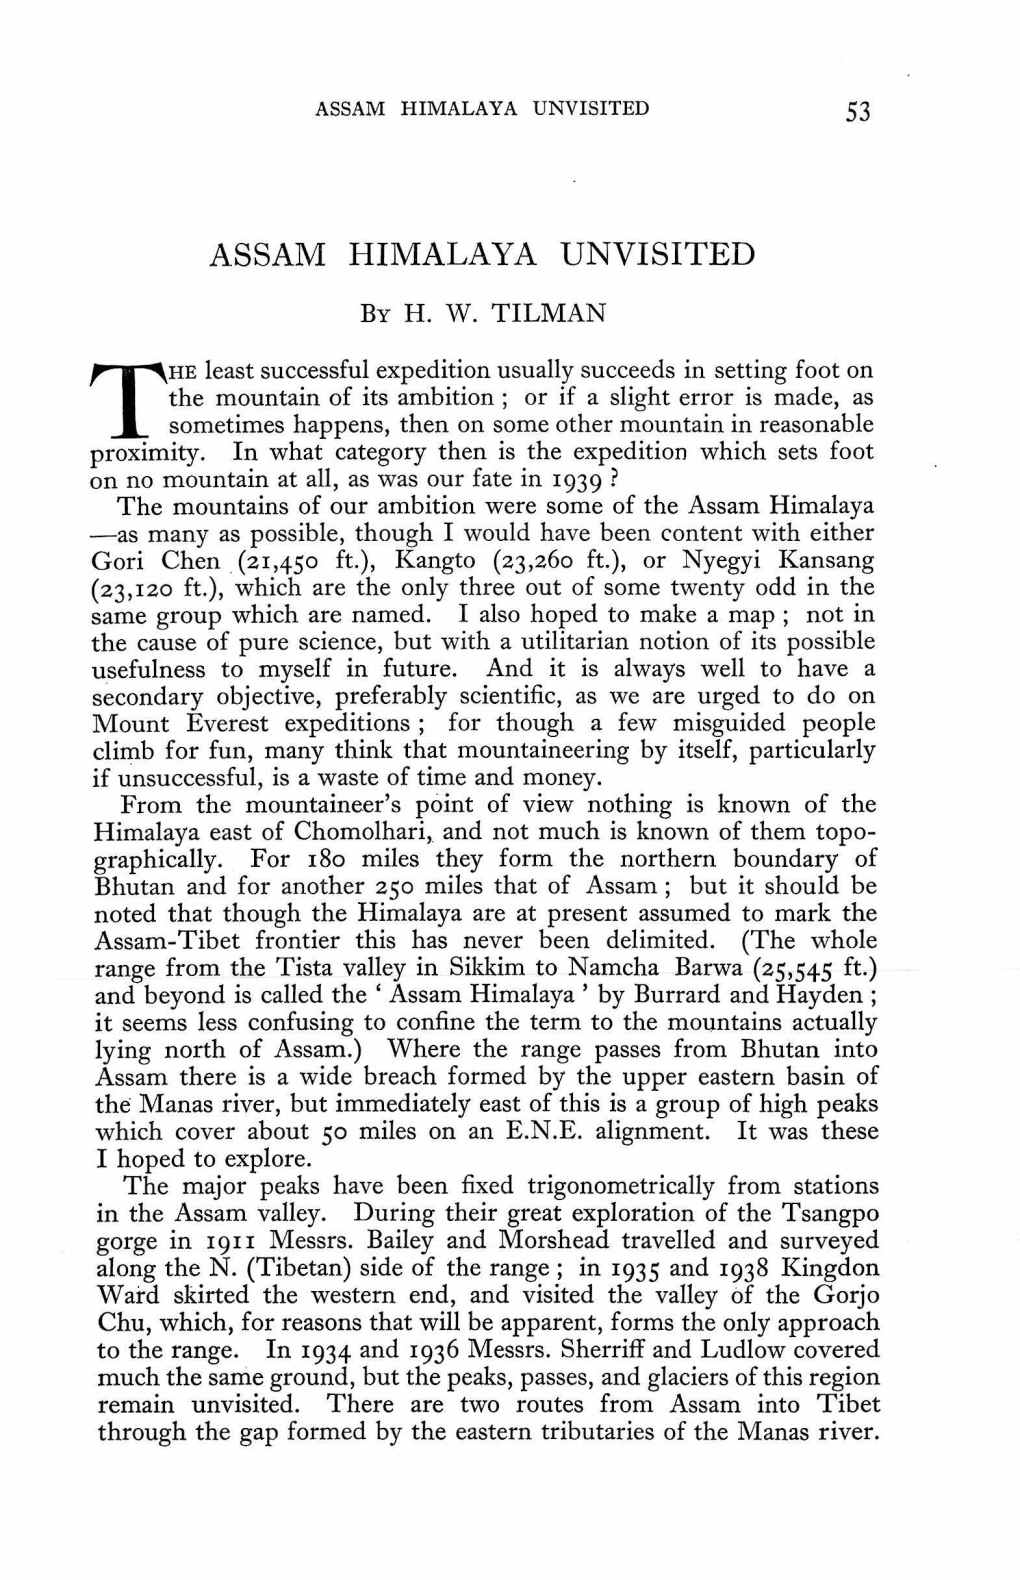 ASSAM HIMALAYA UNVISITED. H. W. Tilman